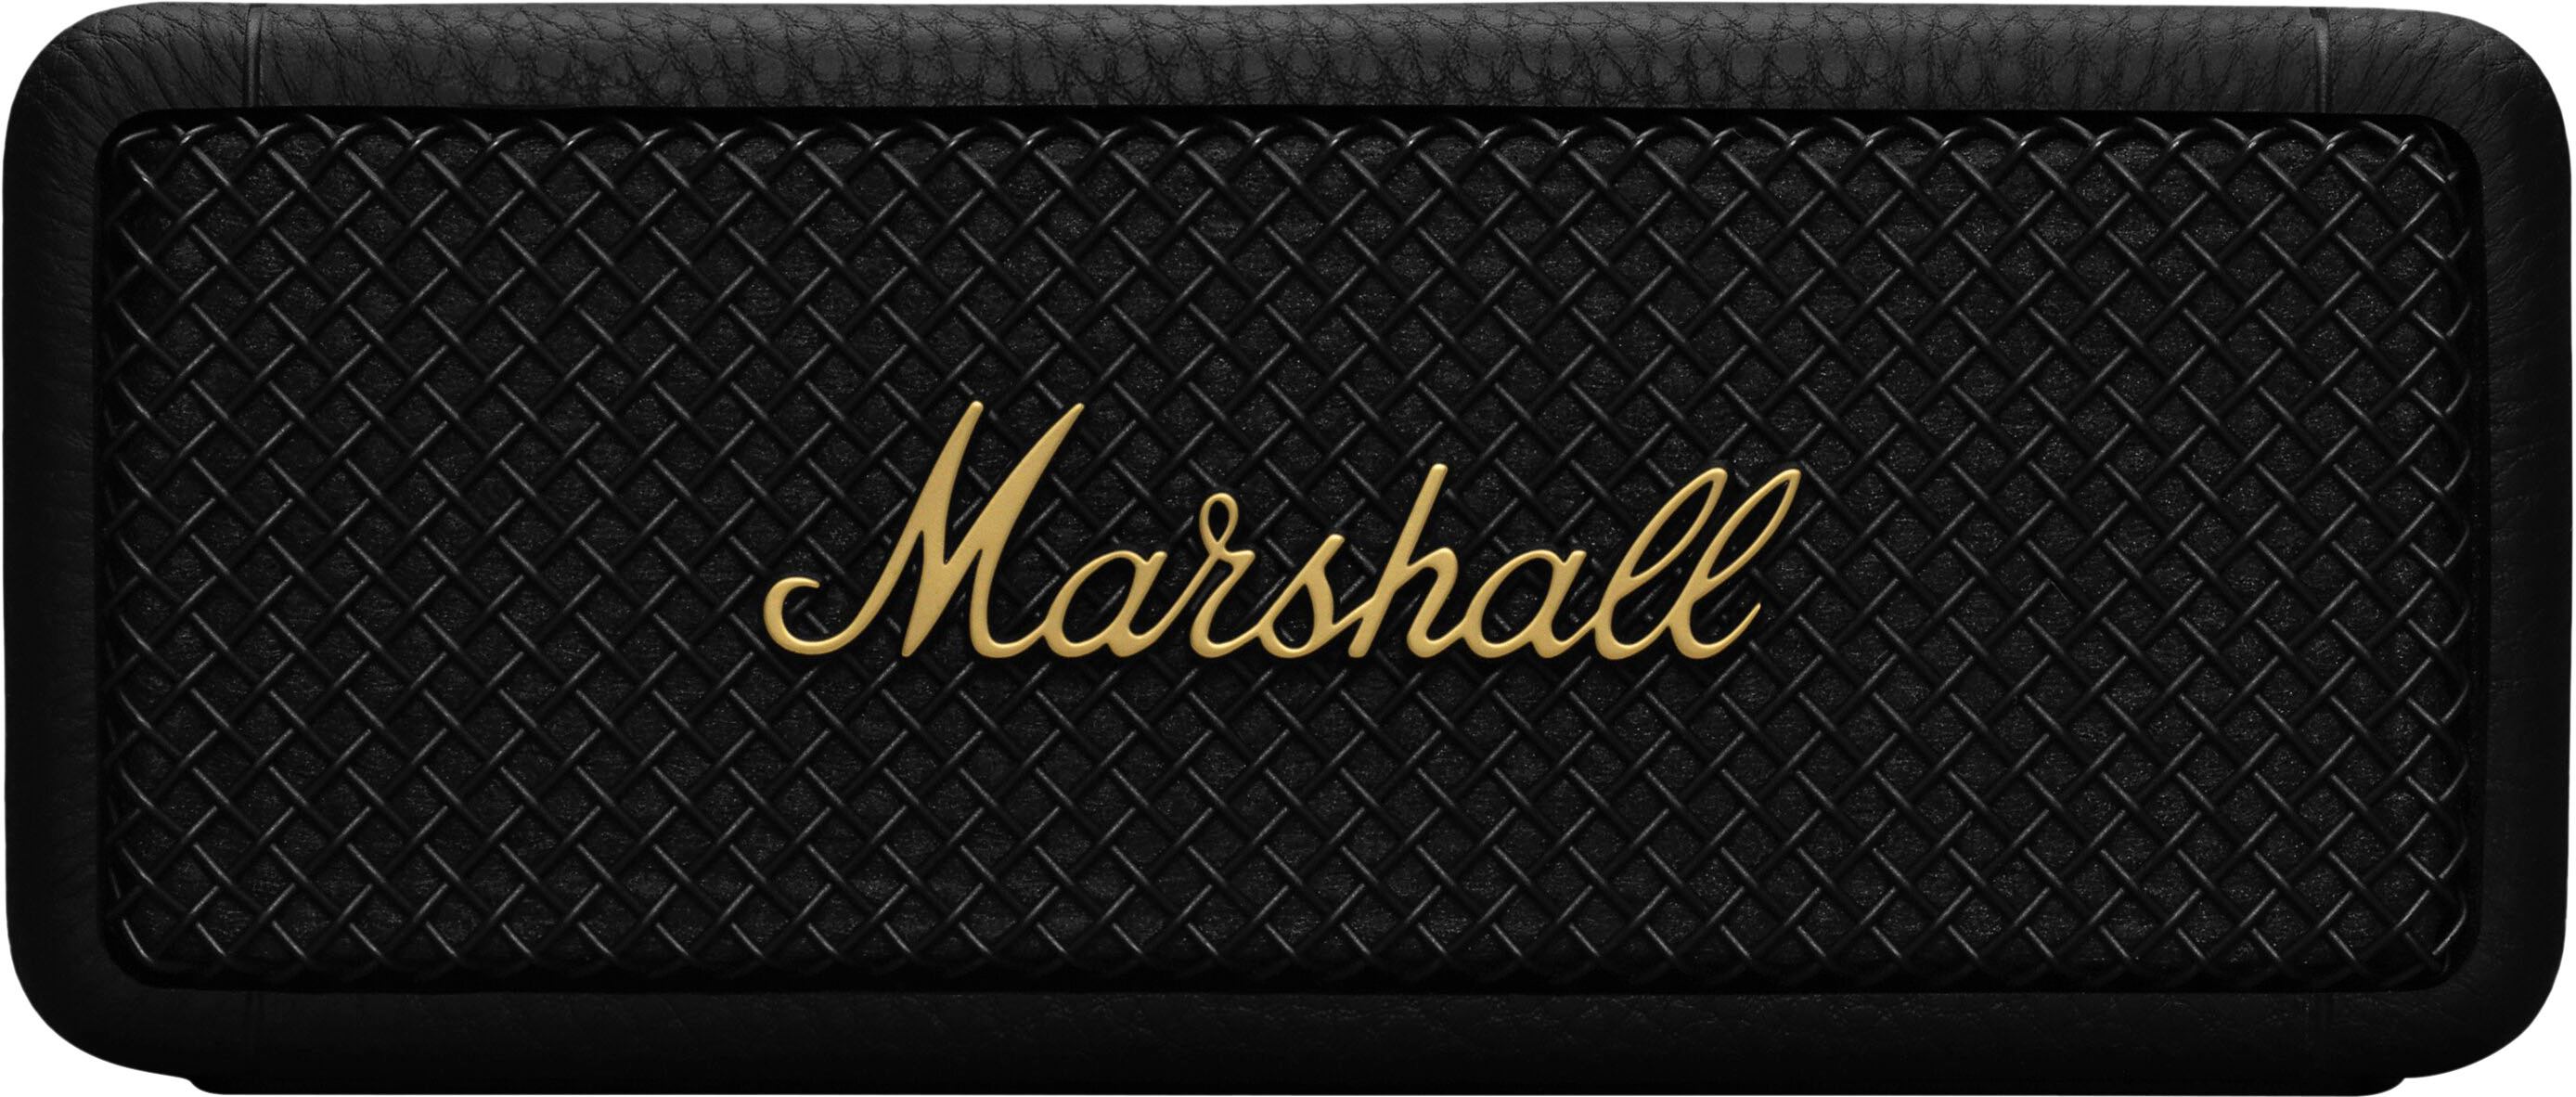 MARSHALL EMBERTON 2 - The Best Just Got Better! 